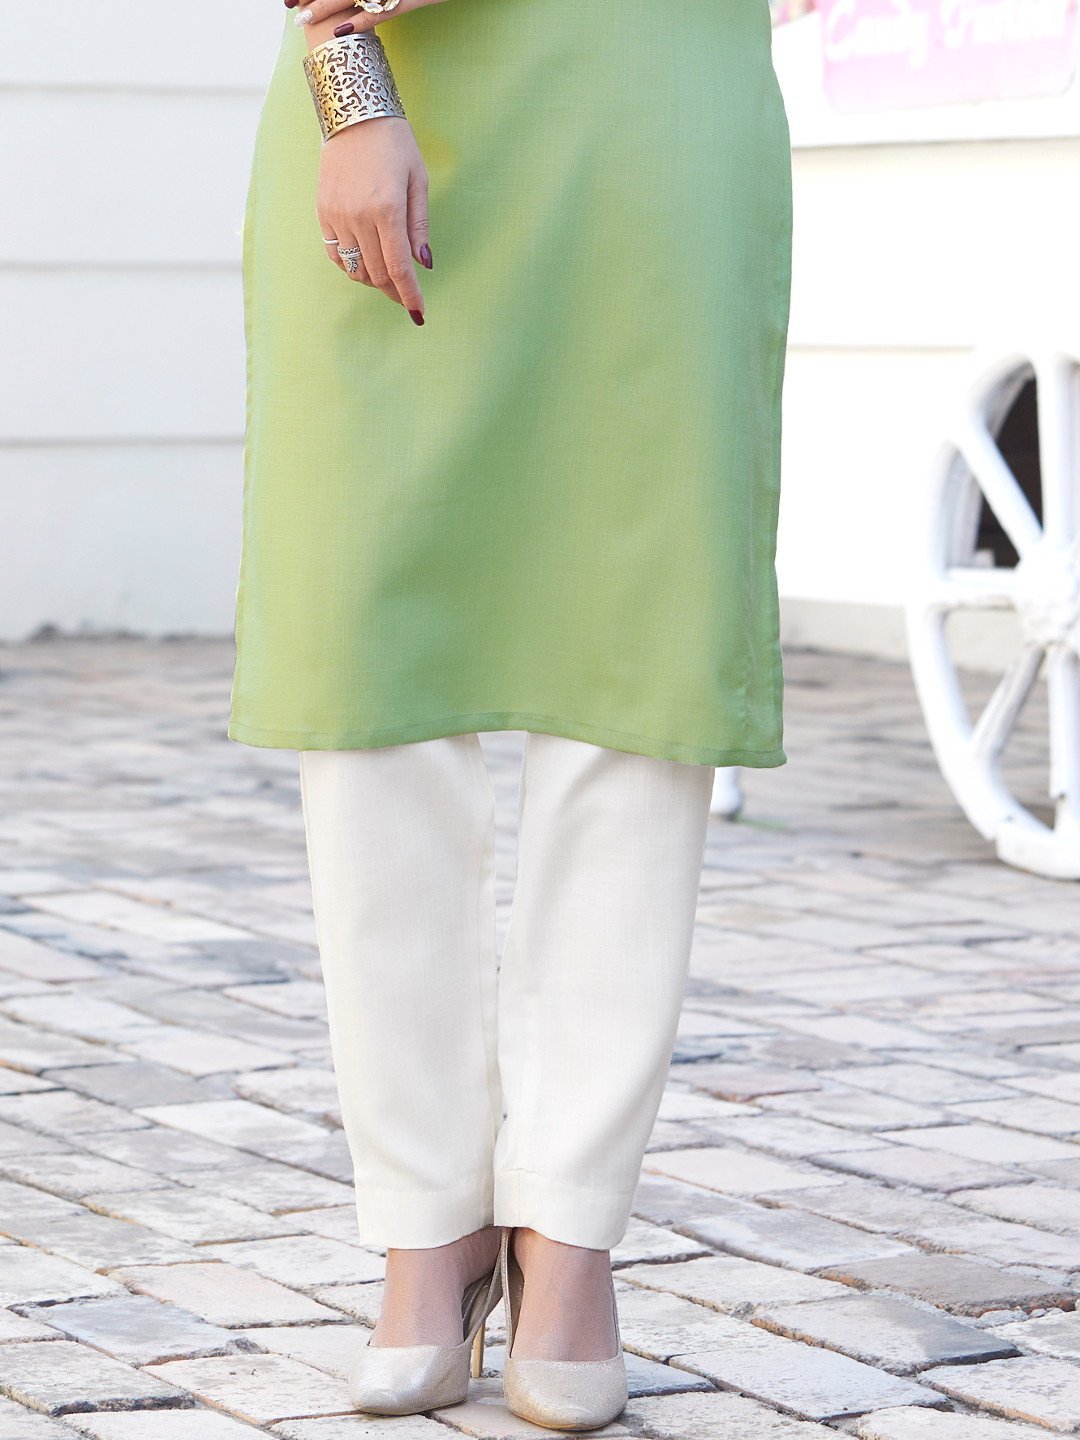 Embroidered Green Women's Side Slit Cotton Kurta - Stilento